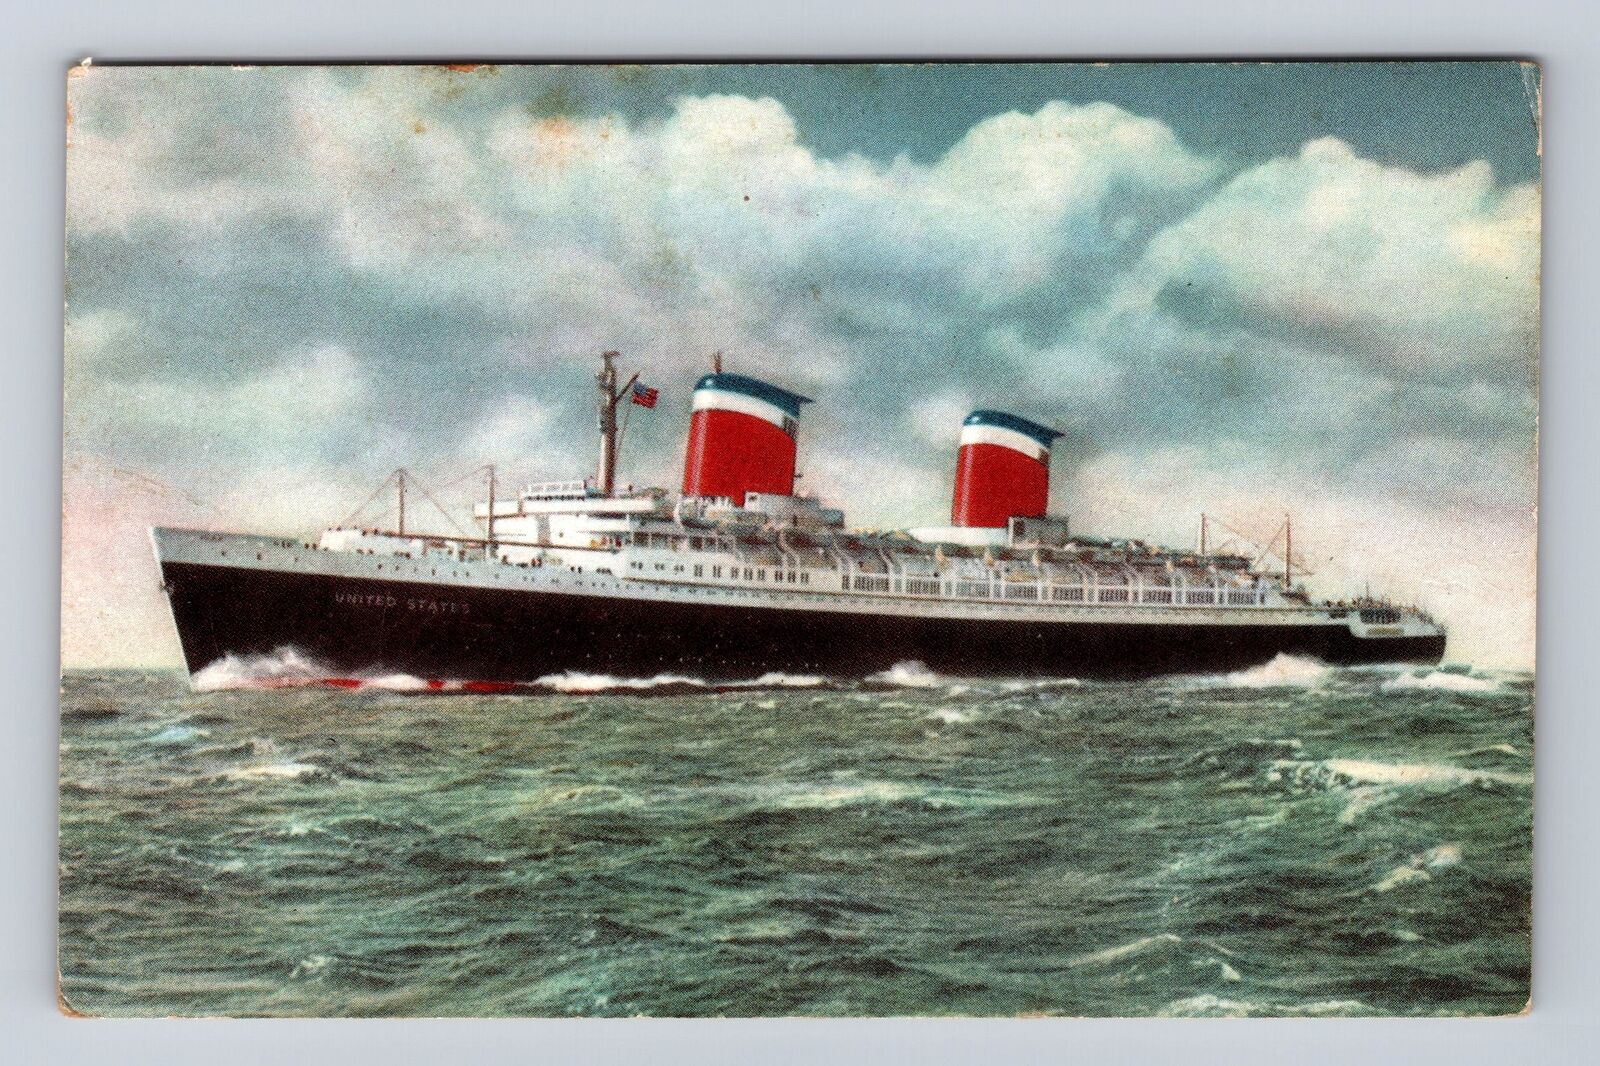 SS United States Luxury Ship, Transportation, Antique Vintage Souvenir Postcard